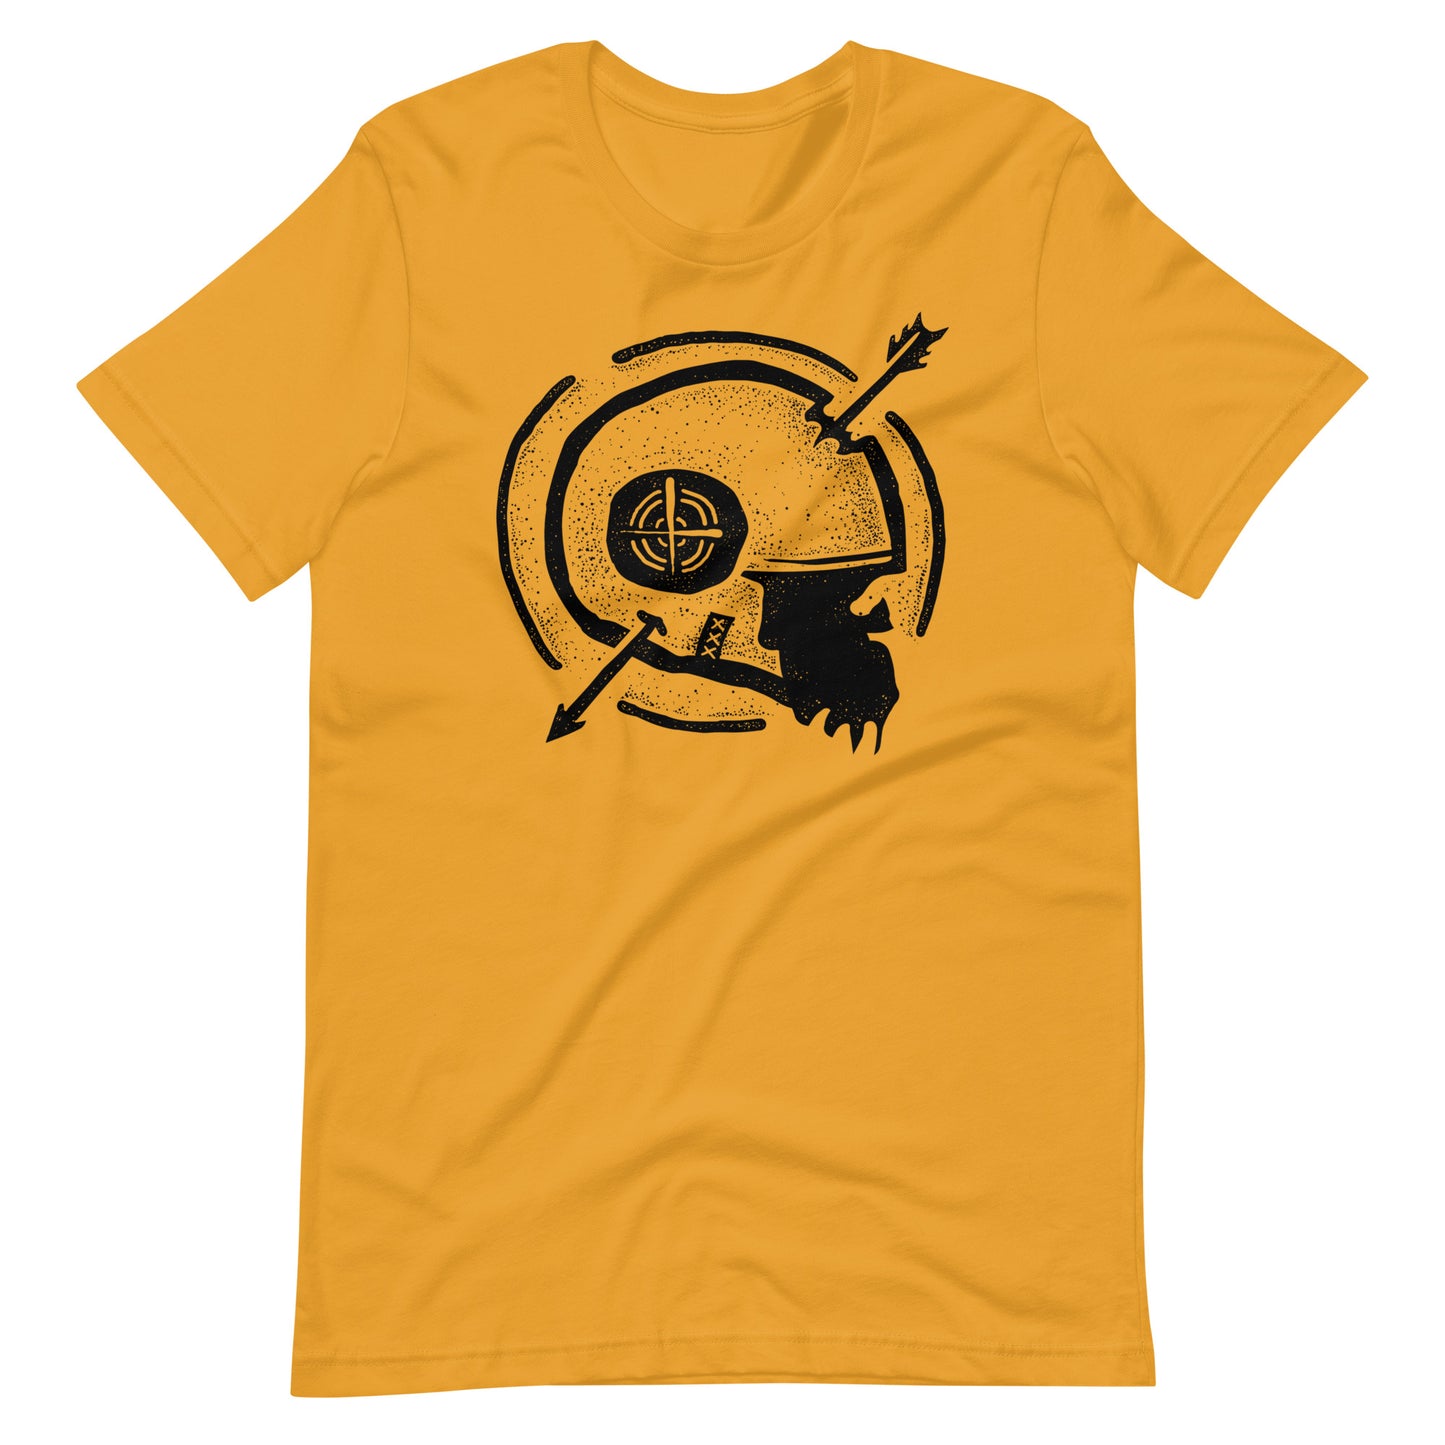 Dead Arrow Black - Men's t-shirt - Mustard Front